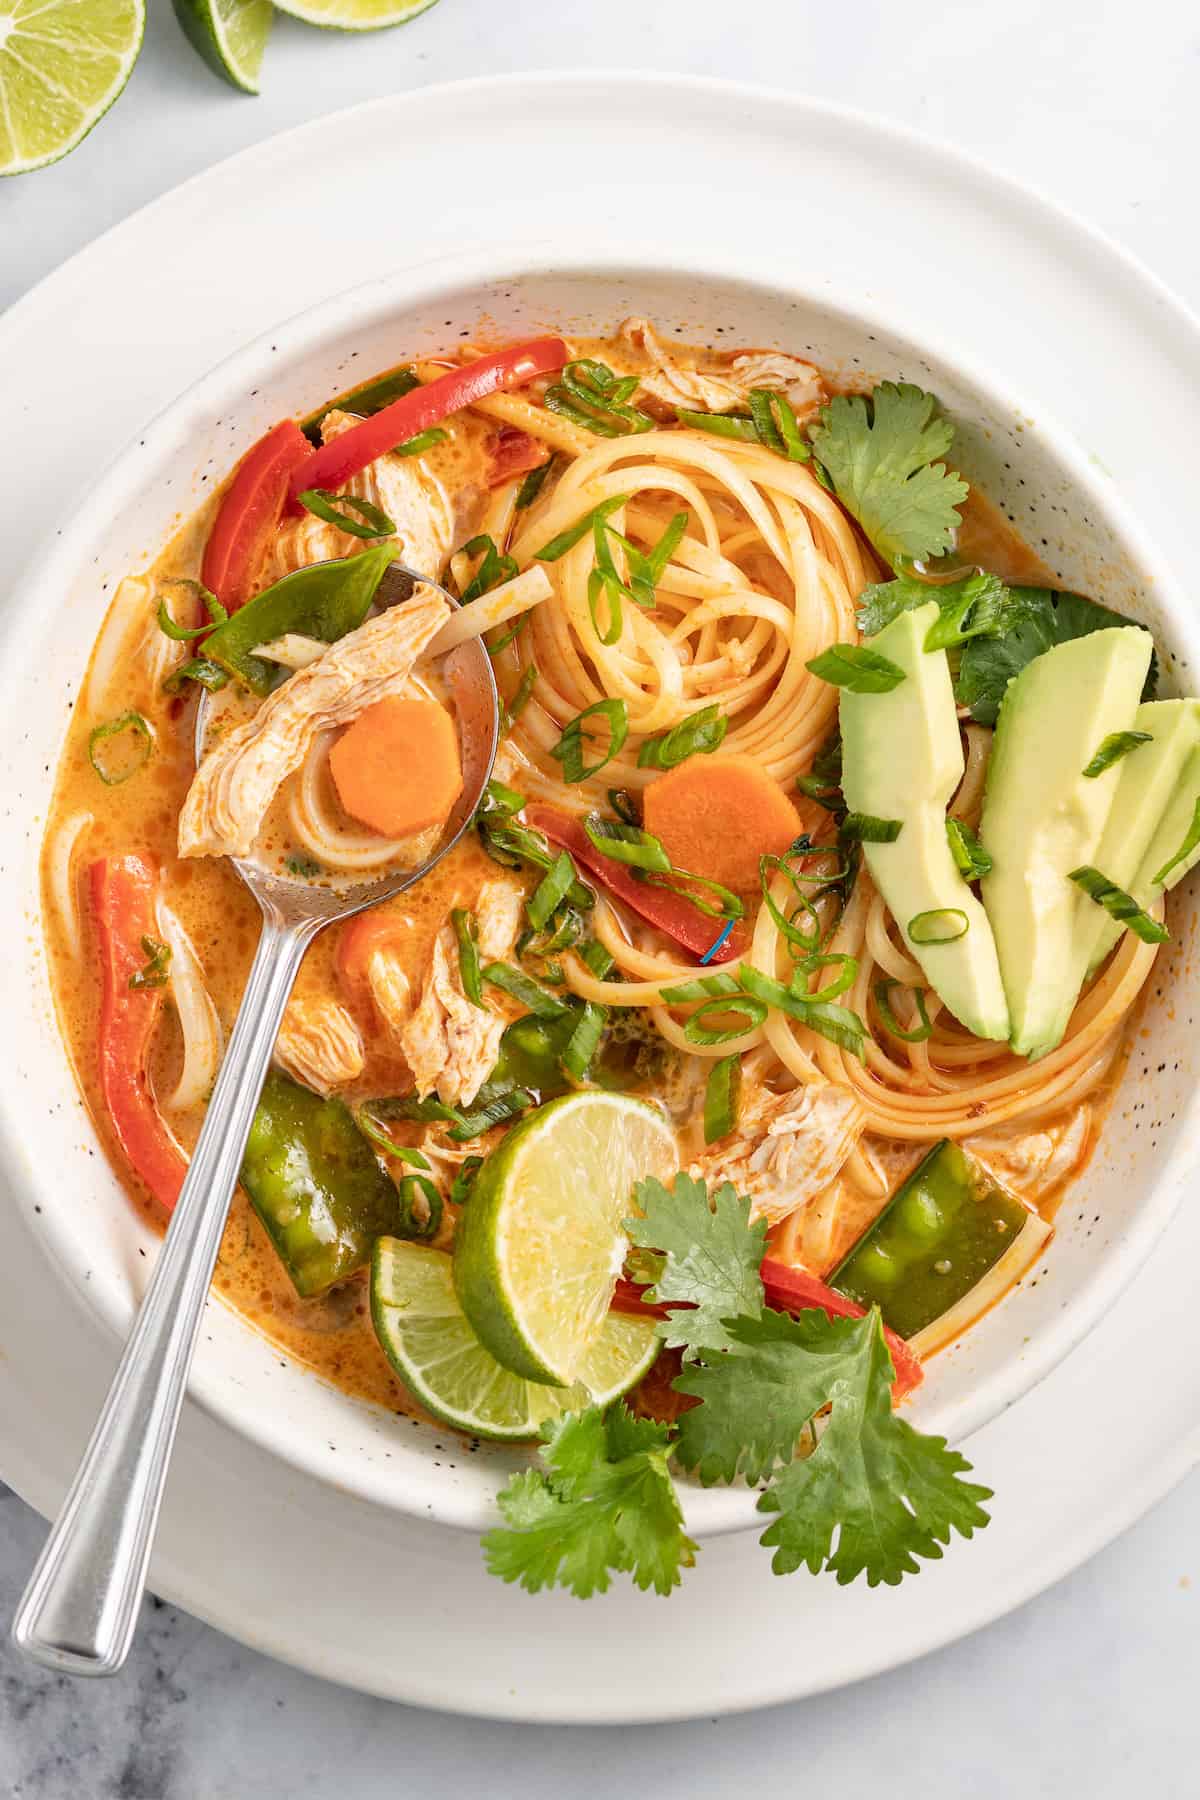 https://www.joyfulhealthyeats.com/wp-content/uploads/2017/08/Thai-Chicken-Noodle-Soup-37-Joyful-Healthy-Eats-121022.jpg